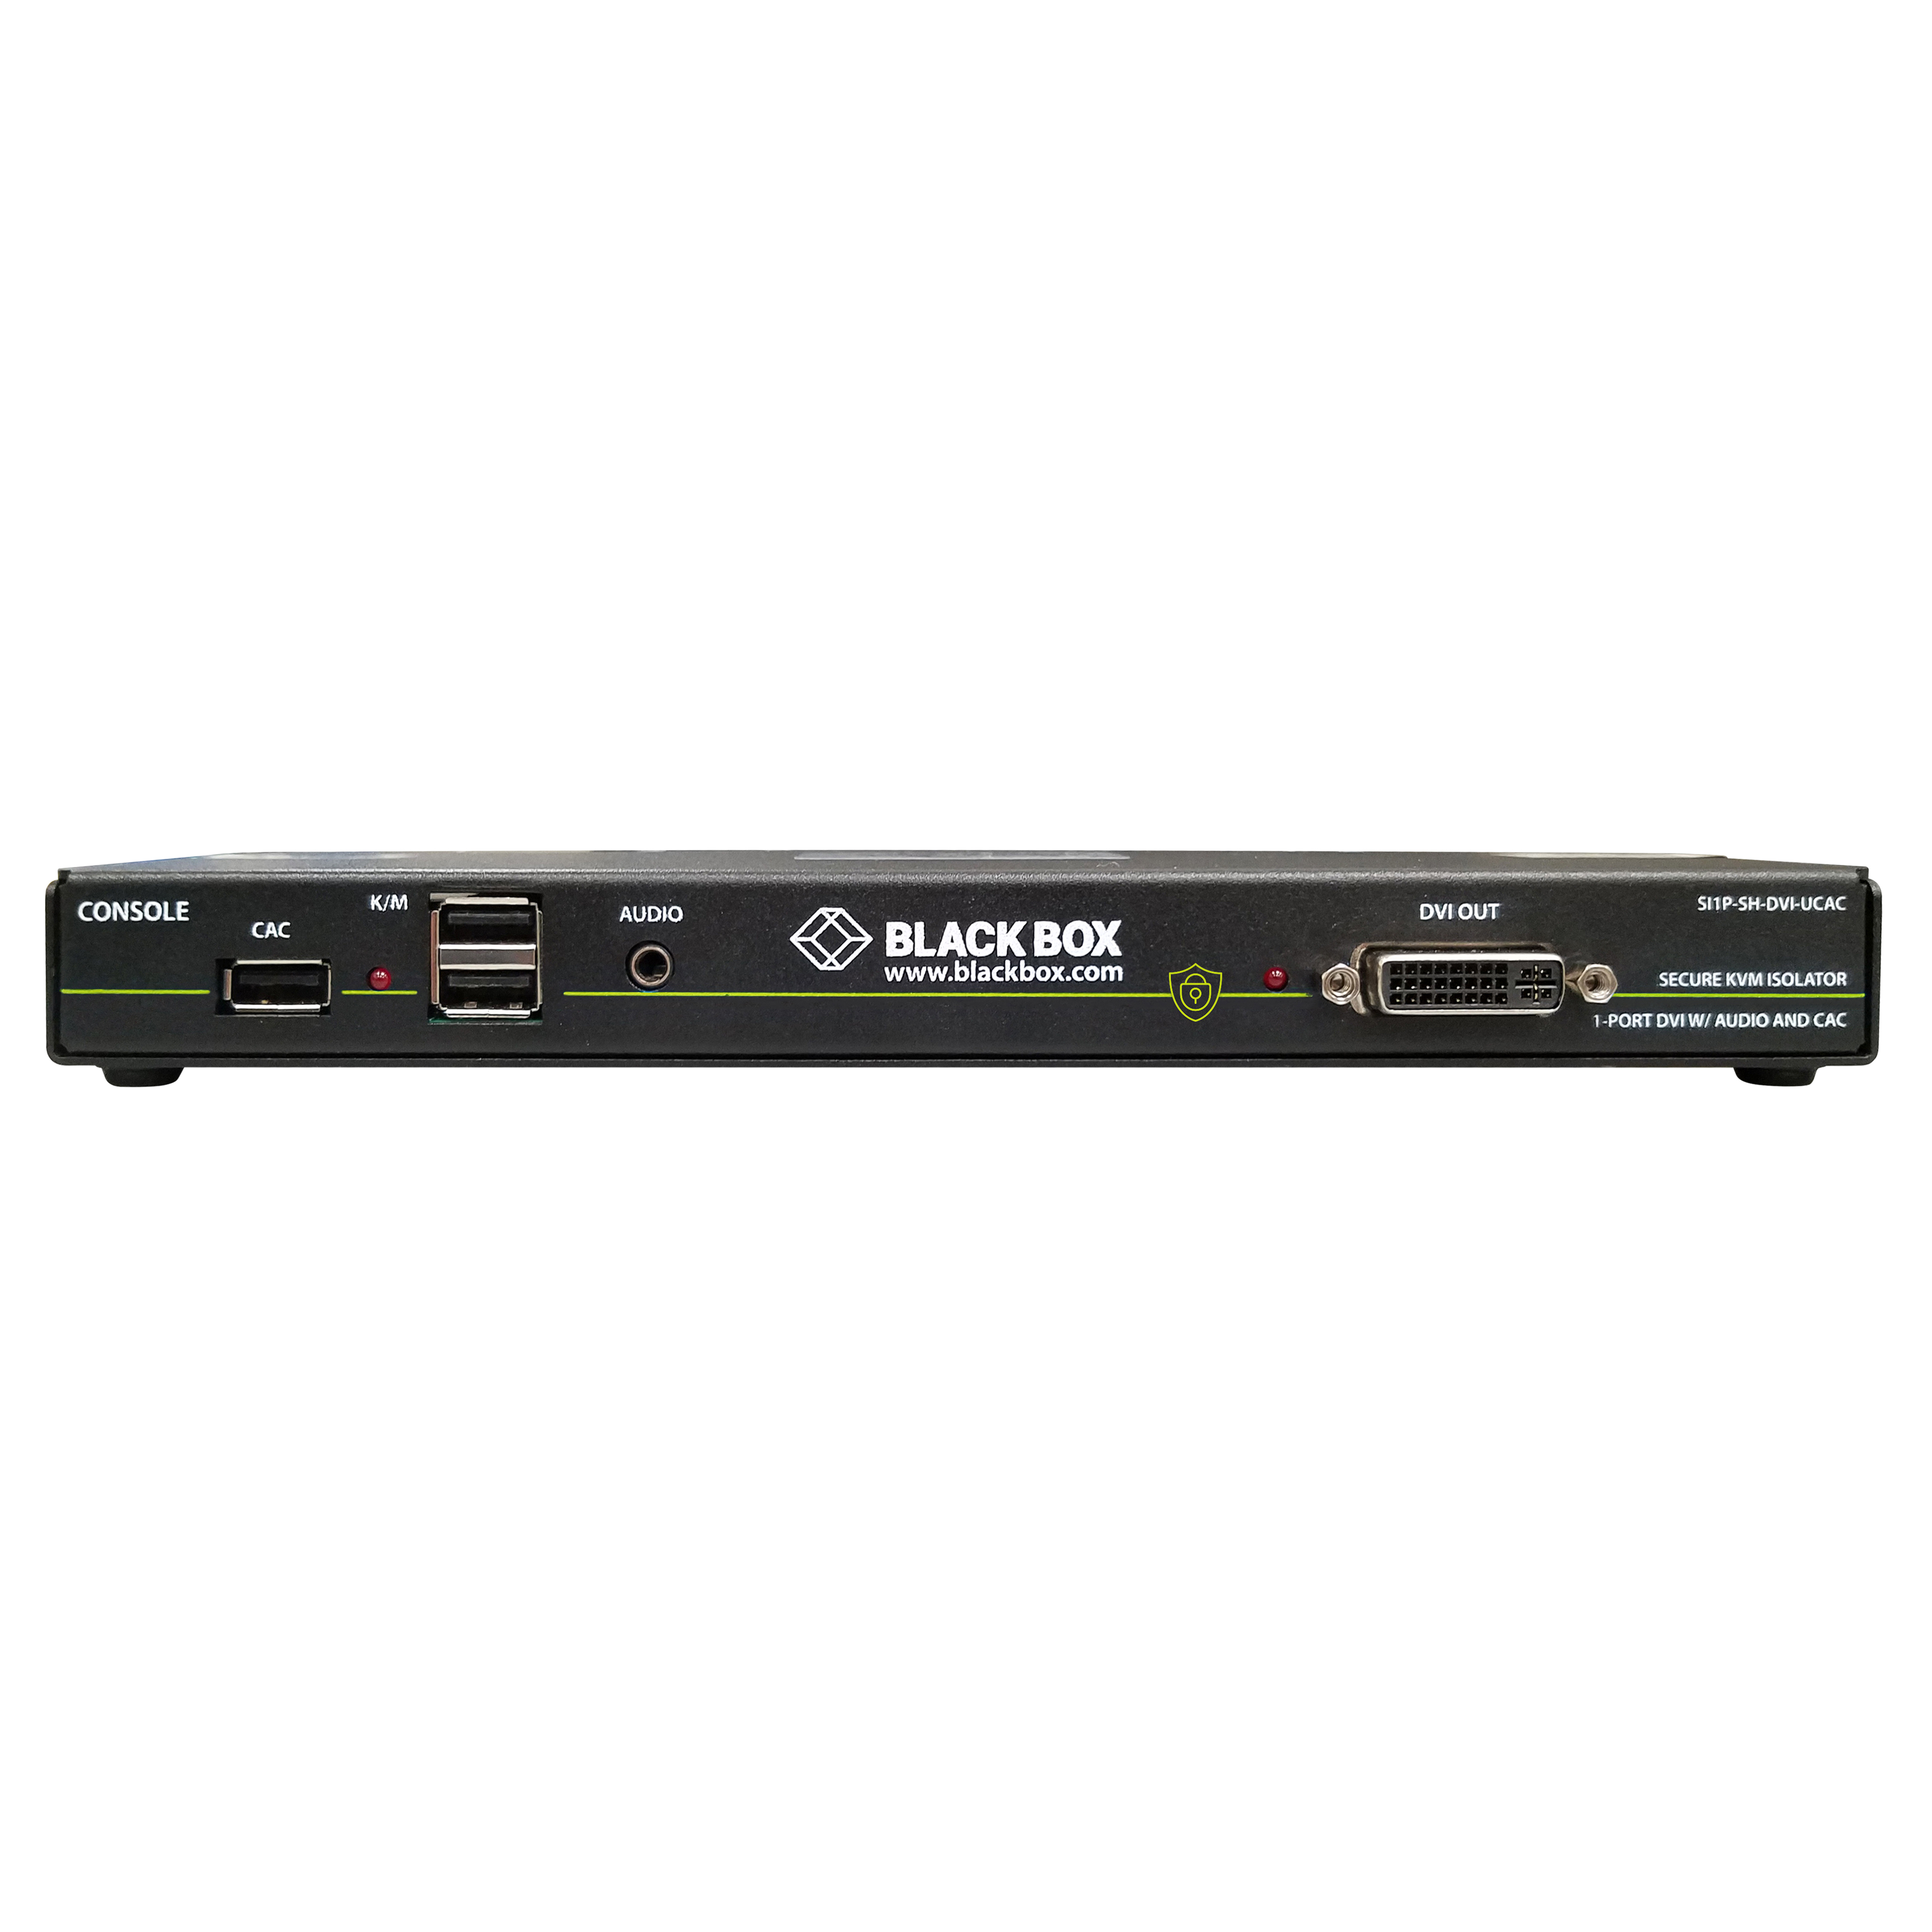 KVM Peripheral Isolator, NIAP 3.0 Single-Monitor, DVI-I, USB, CAC 